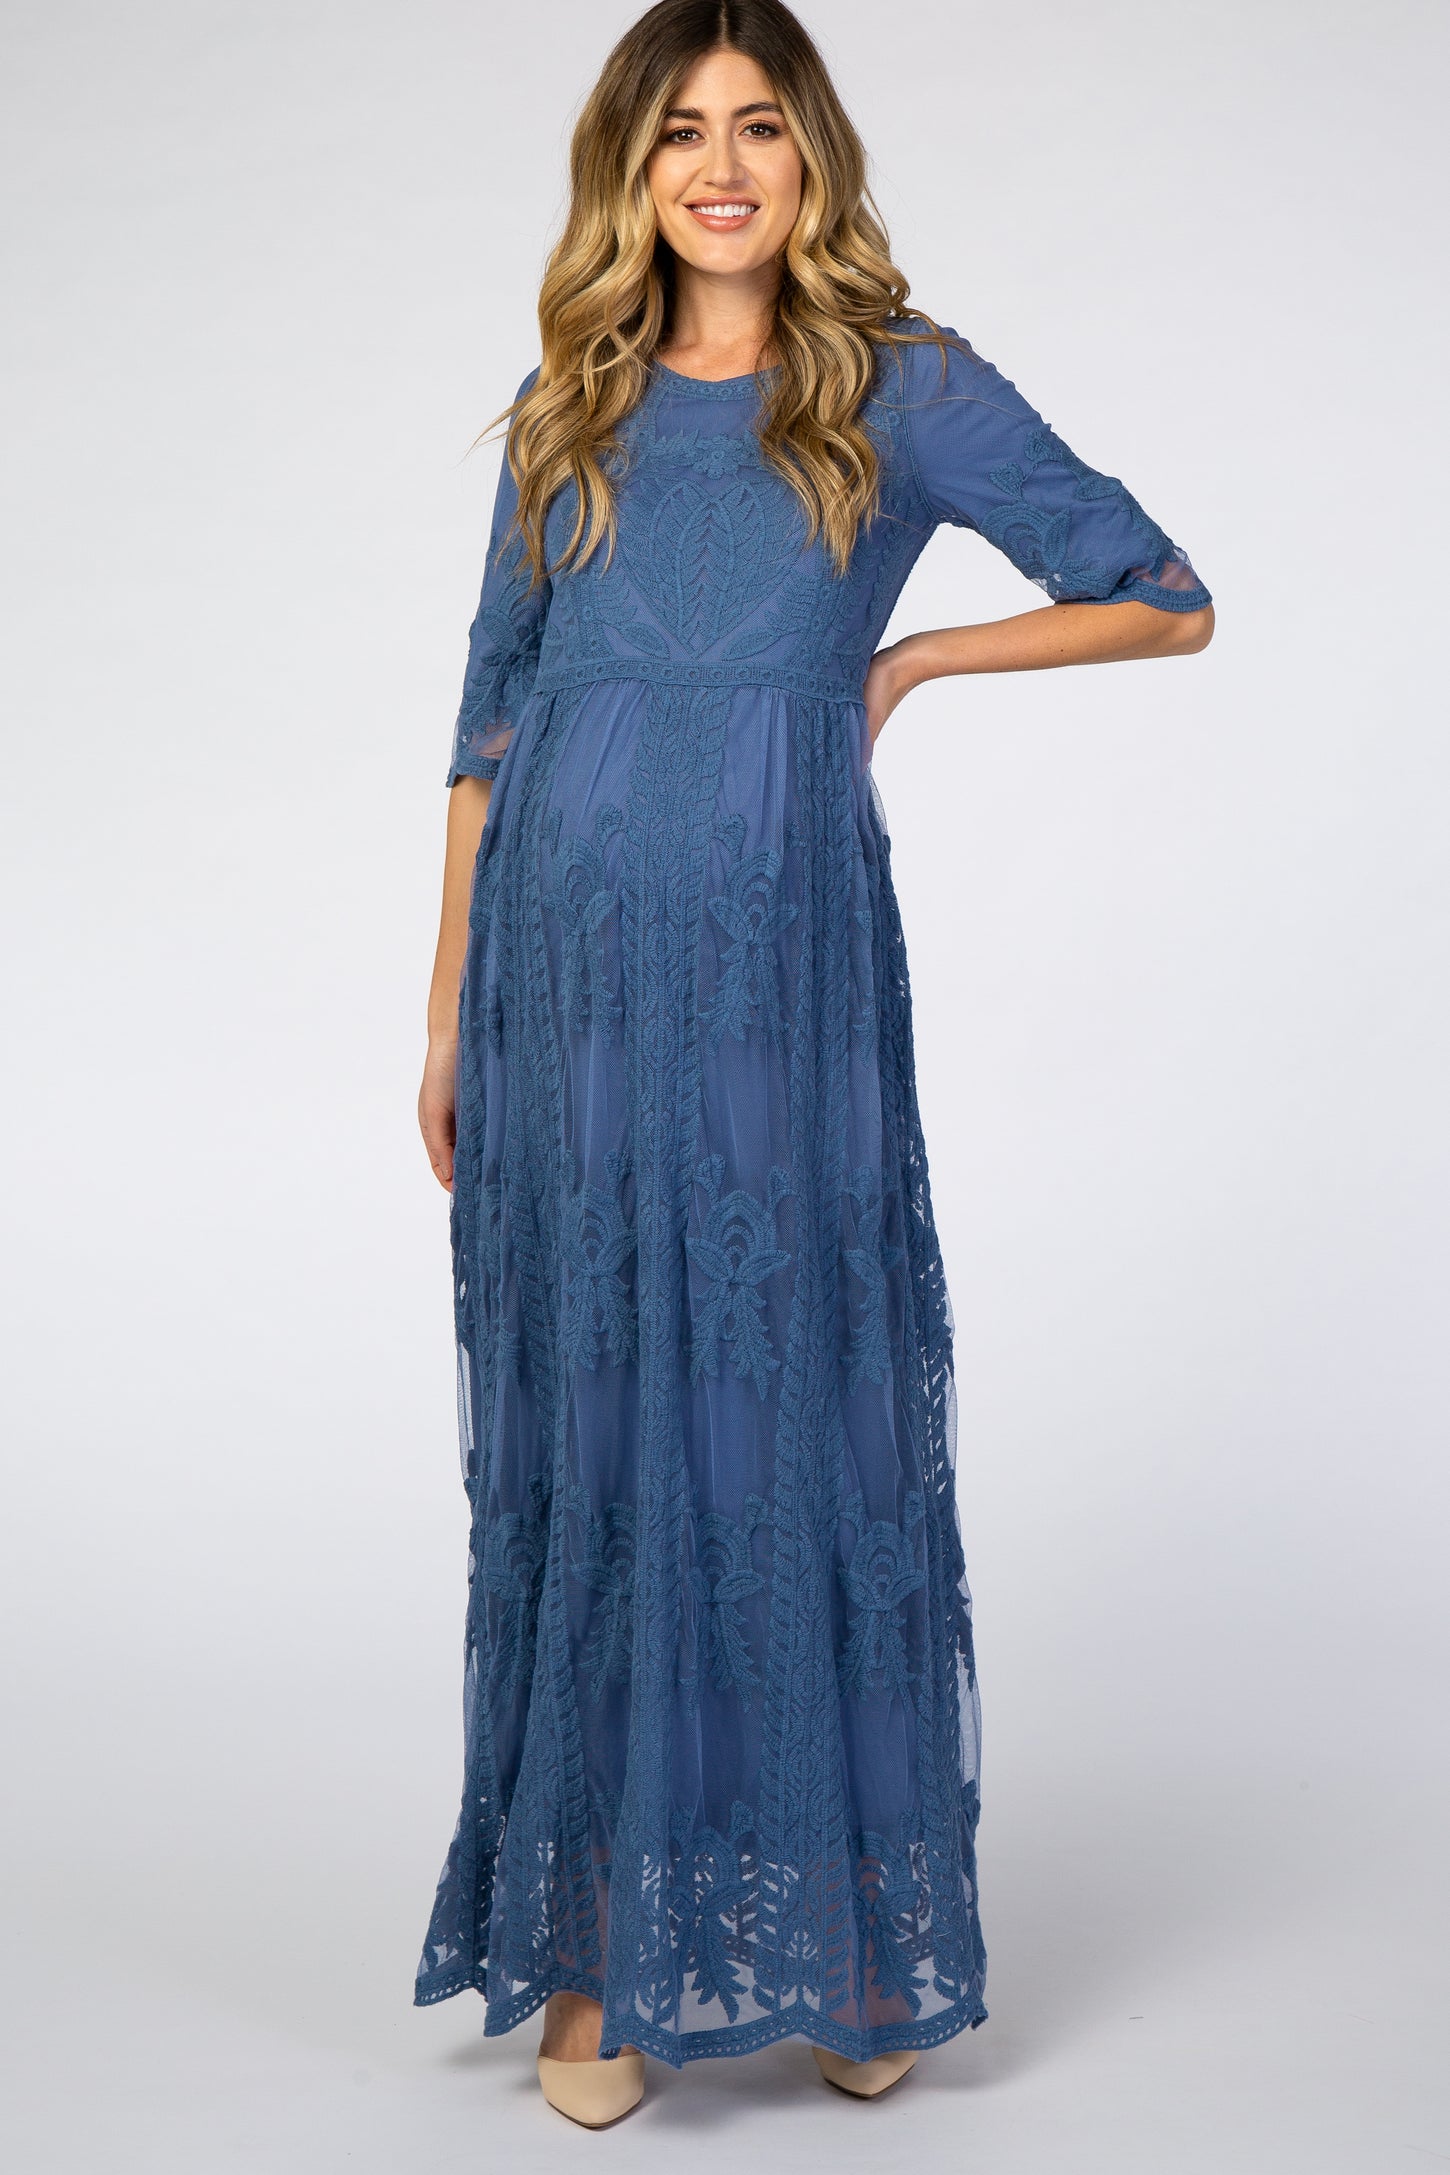 Blue Crochet Overlay Maternity Maxi Dress